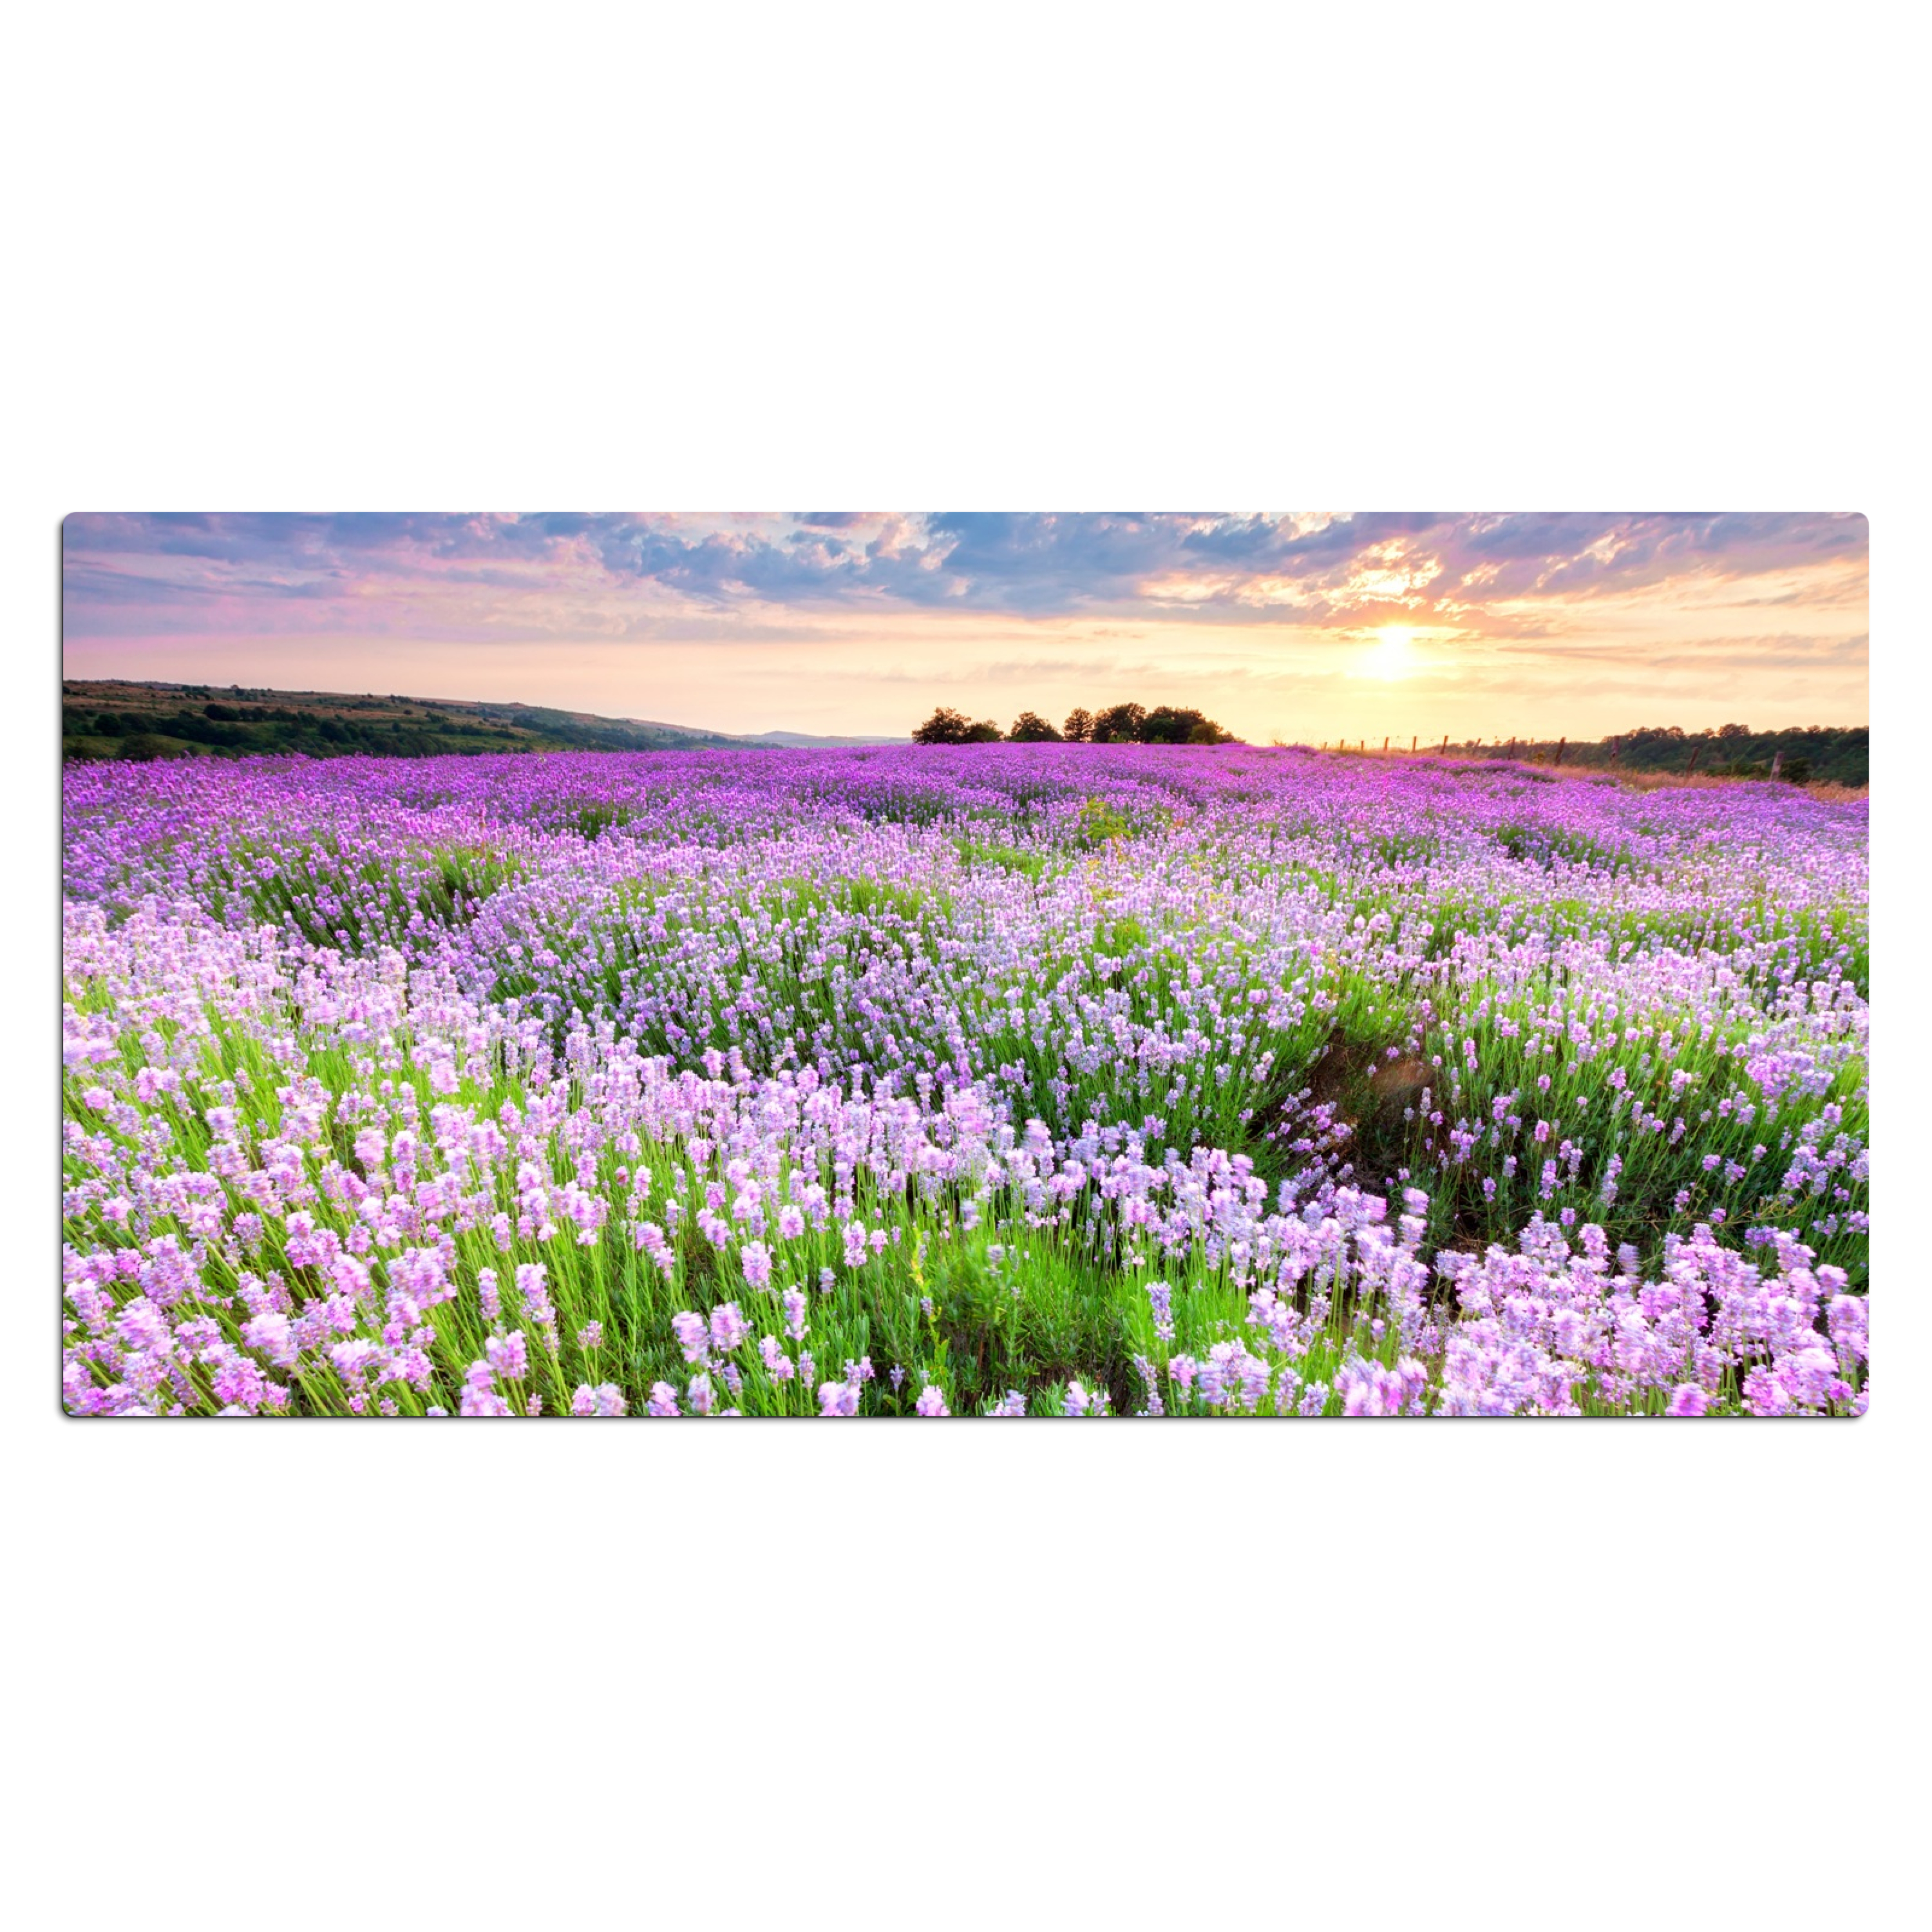 Bureau onderlegger - Bloemen - Lavendel - Paars - Lucht - Zonsondergang - Weide - Natuur